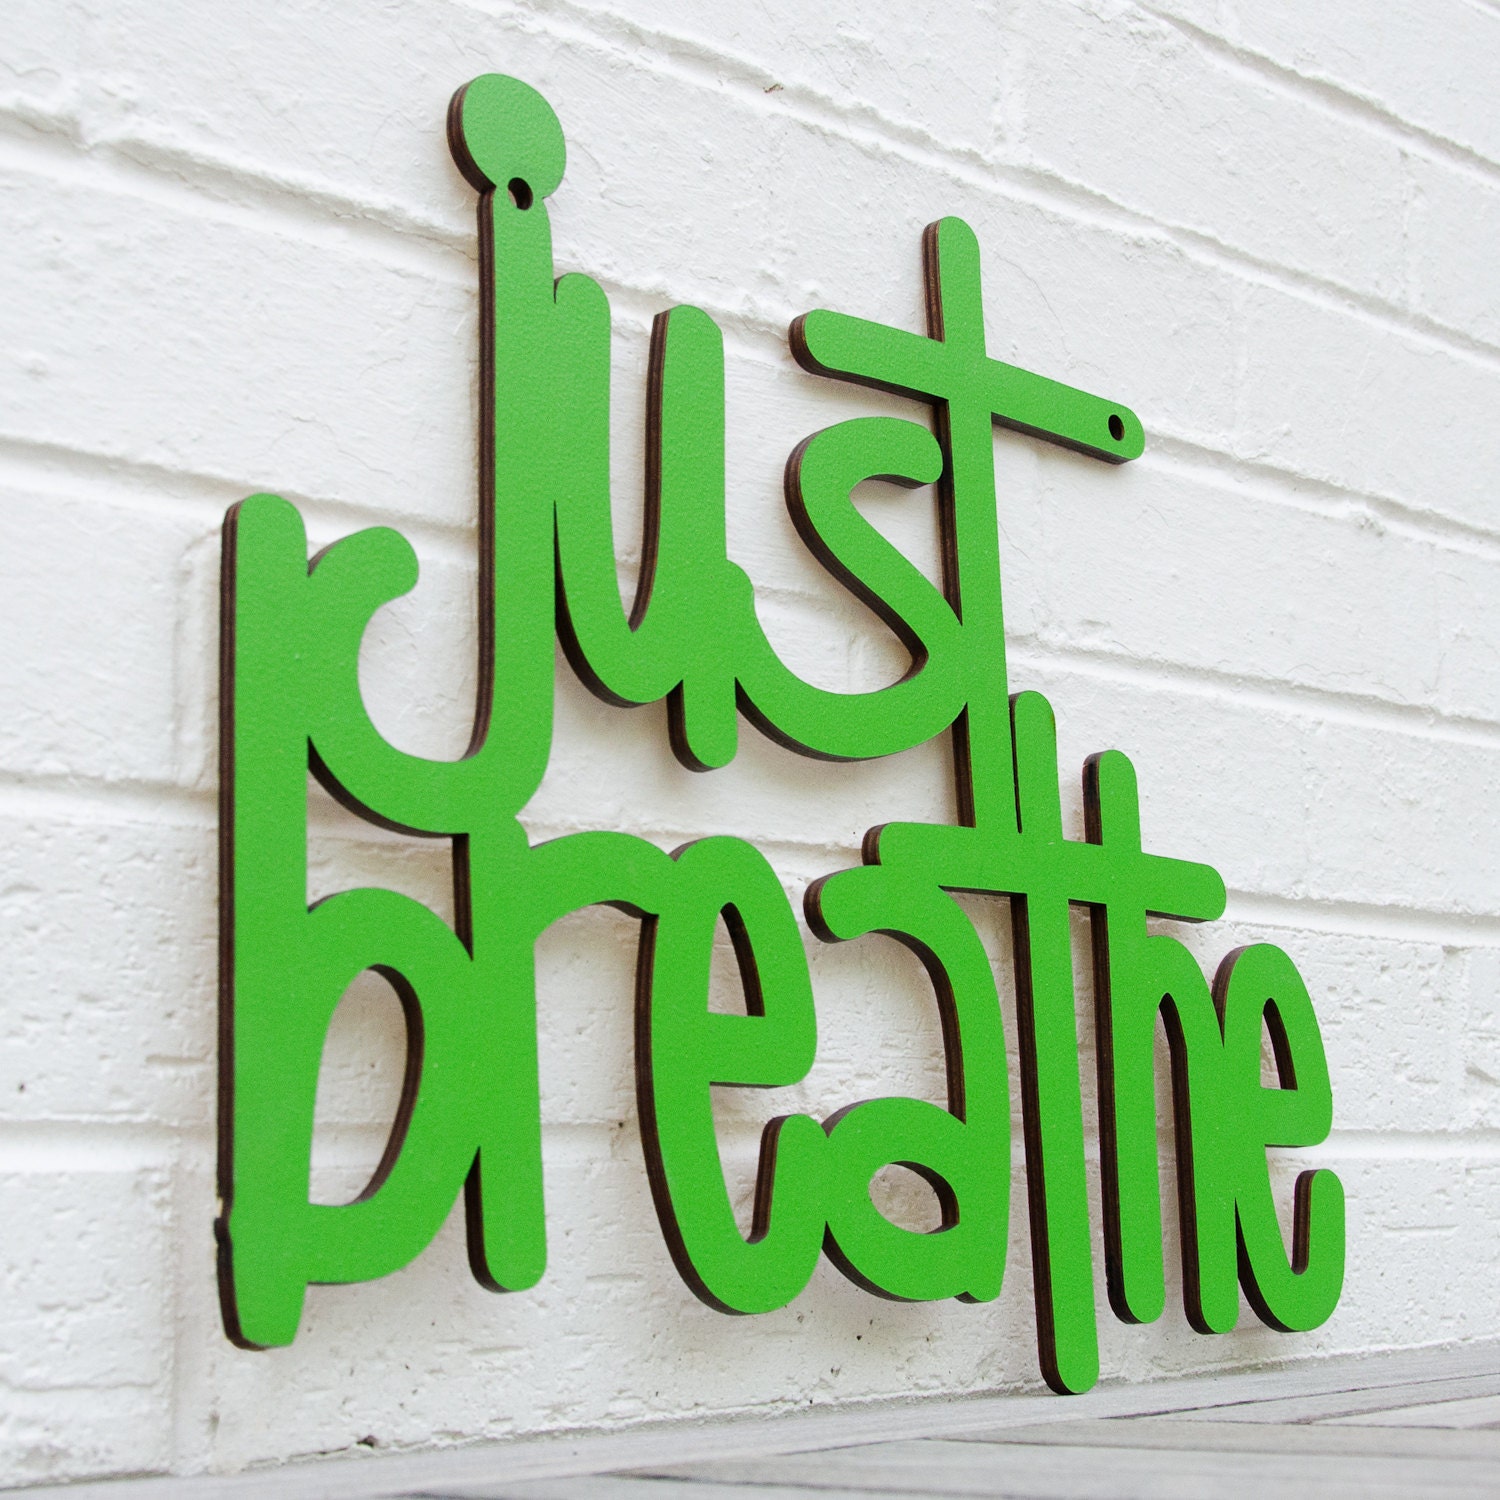 Just Breathe (keep calm)